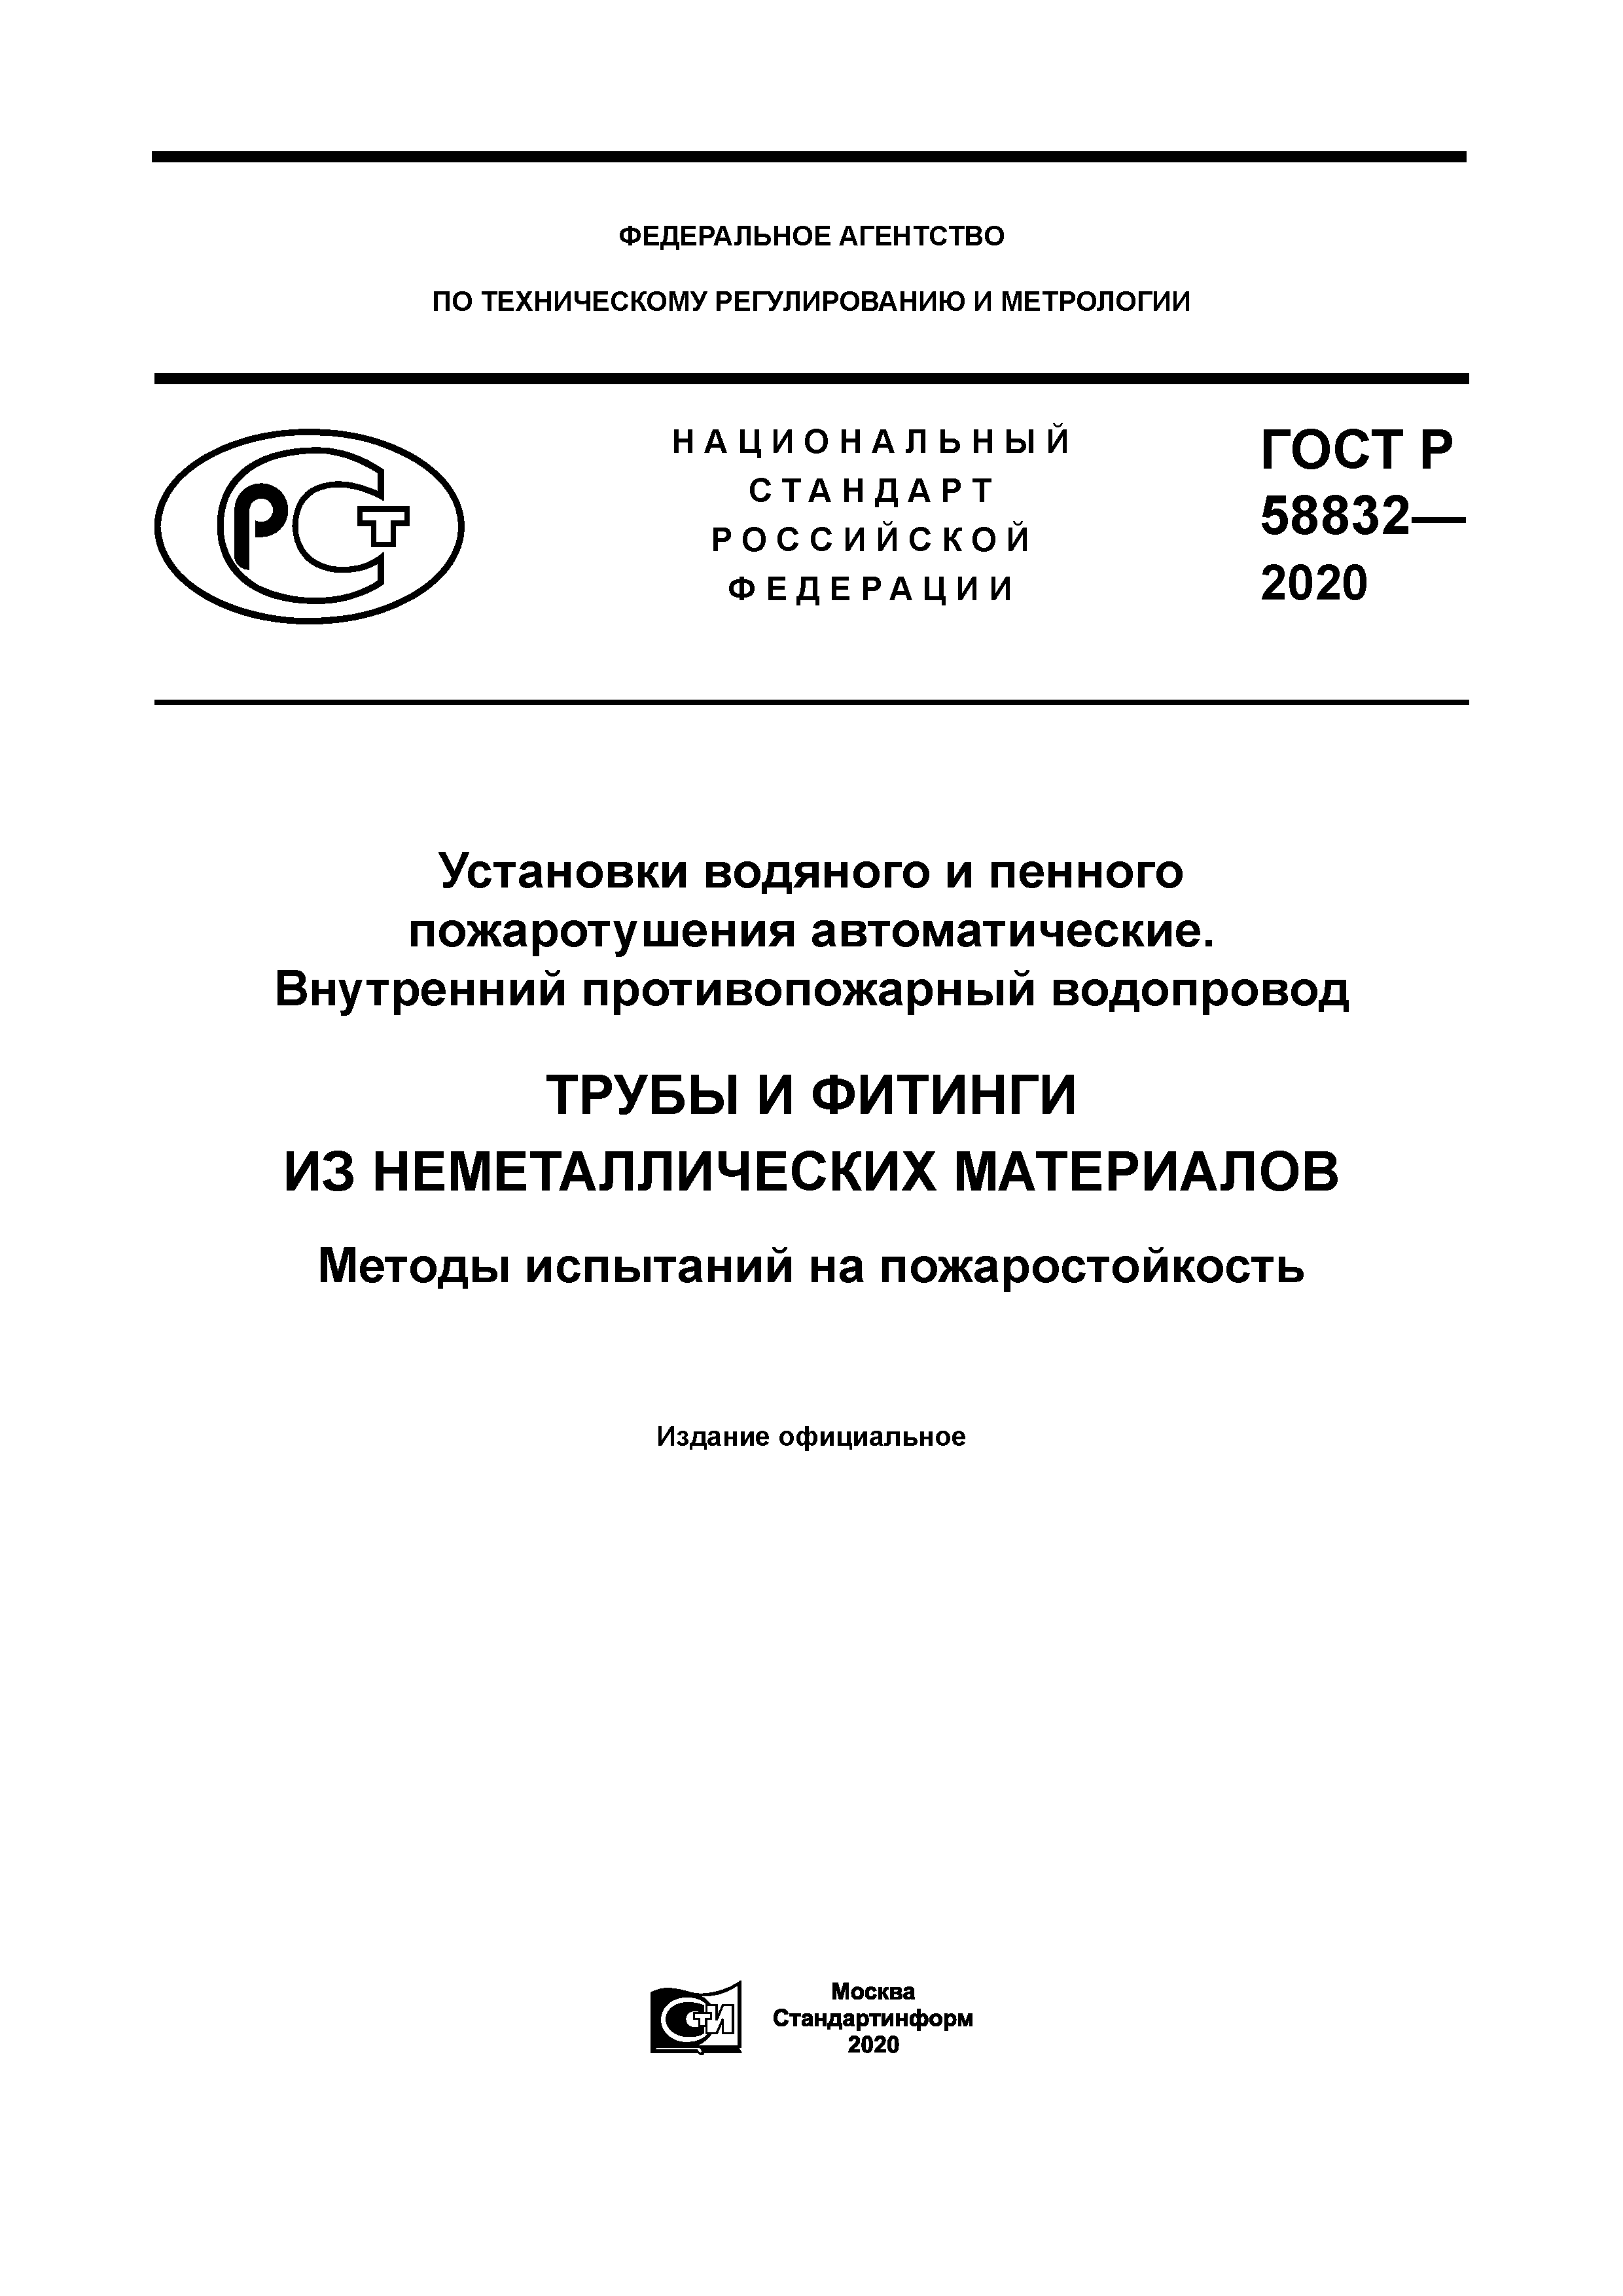 ГОСТ Р 58832-2020